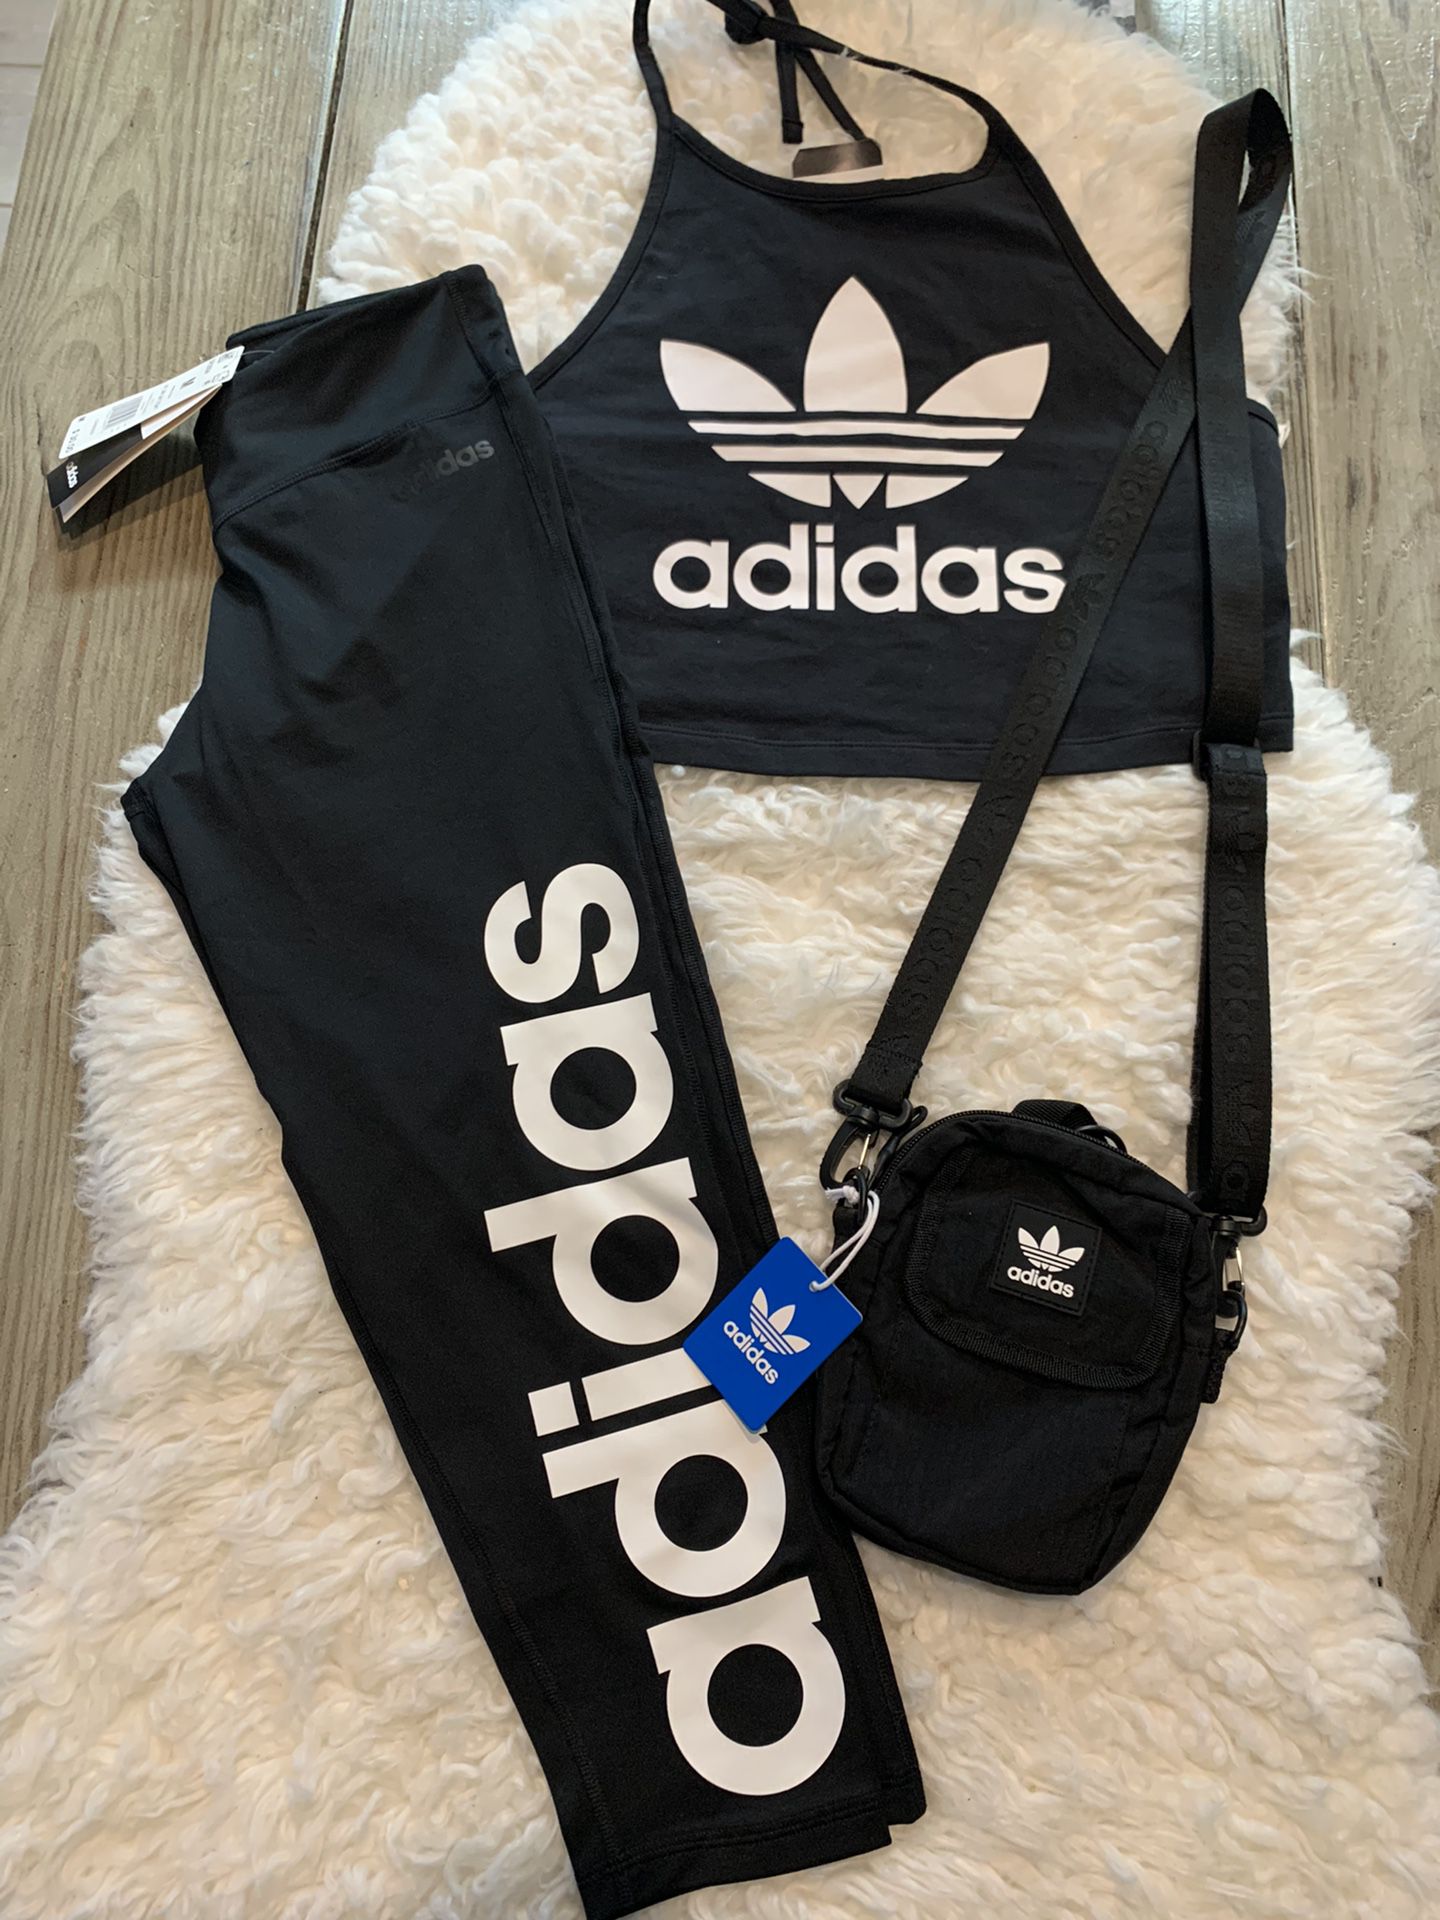 New Adidas Woman’s Set 